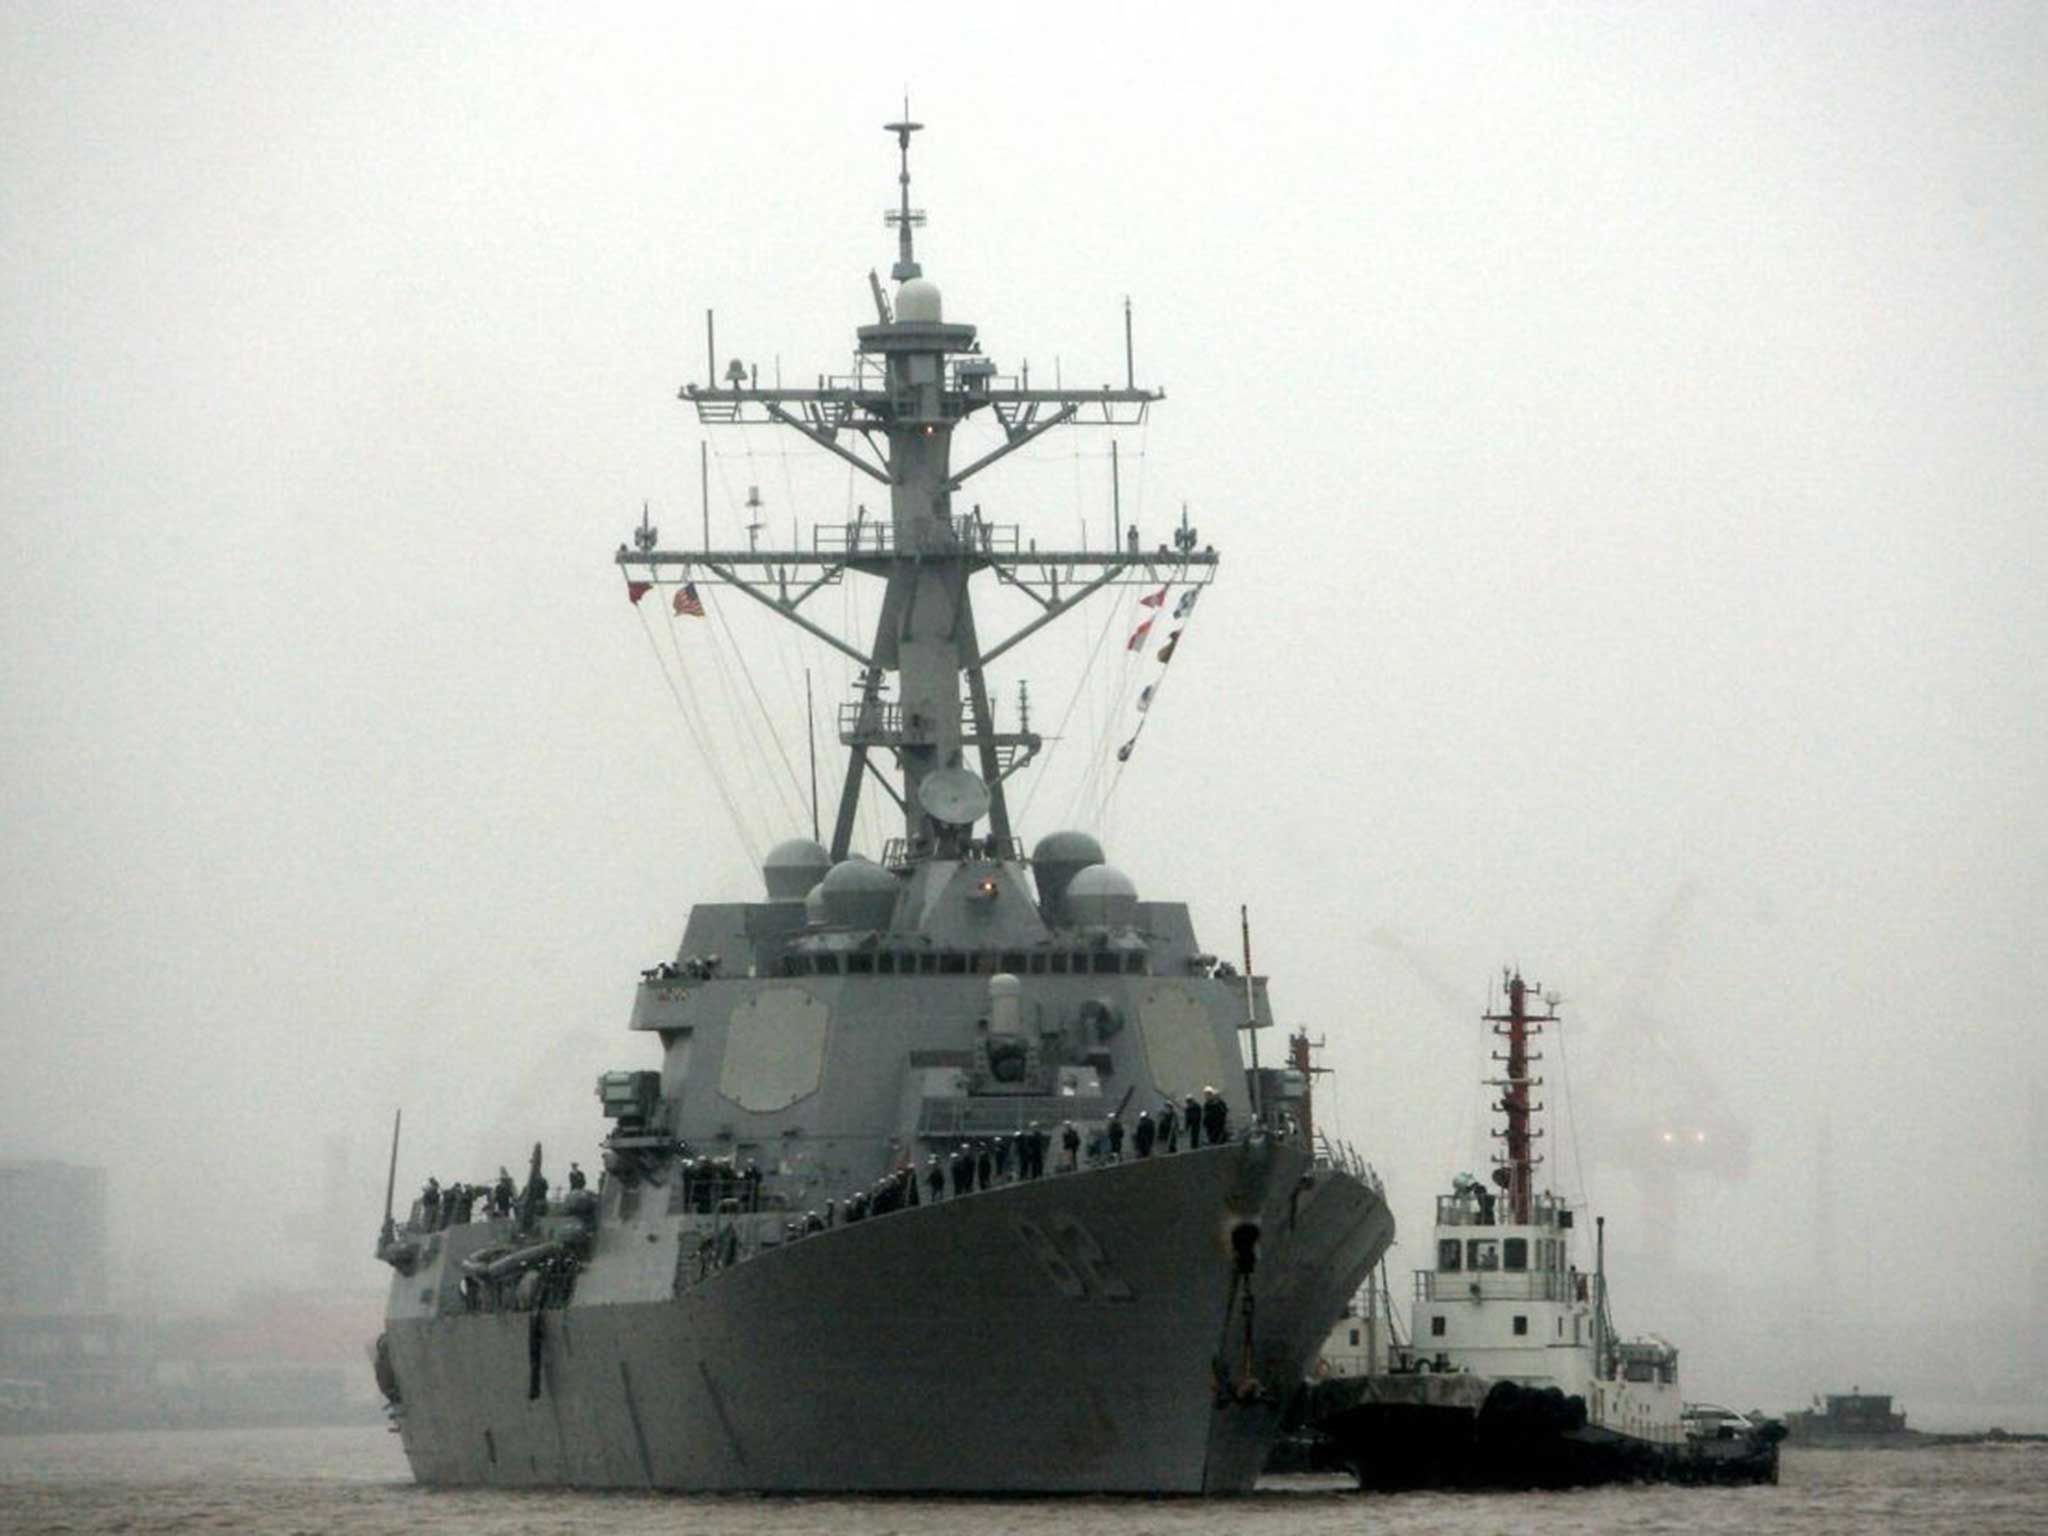 The USS Lassen photographed in Shanghai's international port in 2008